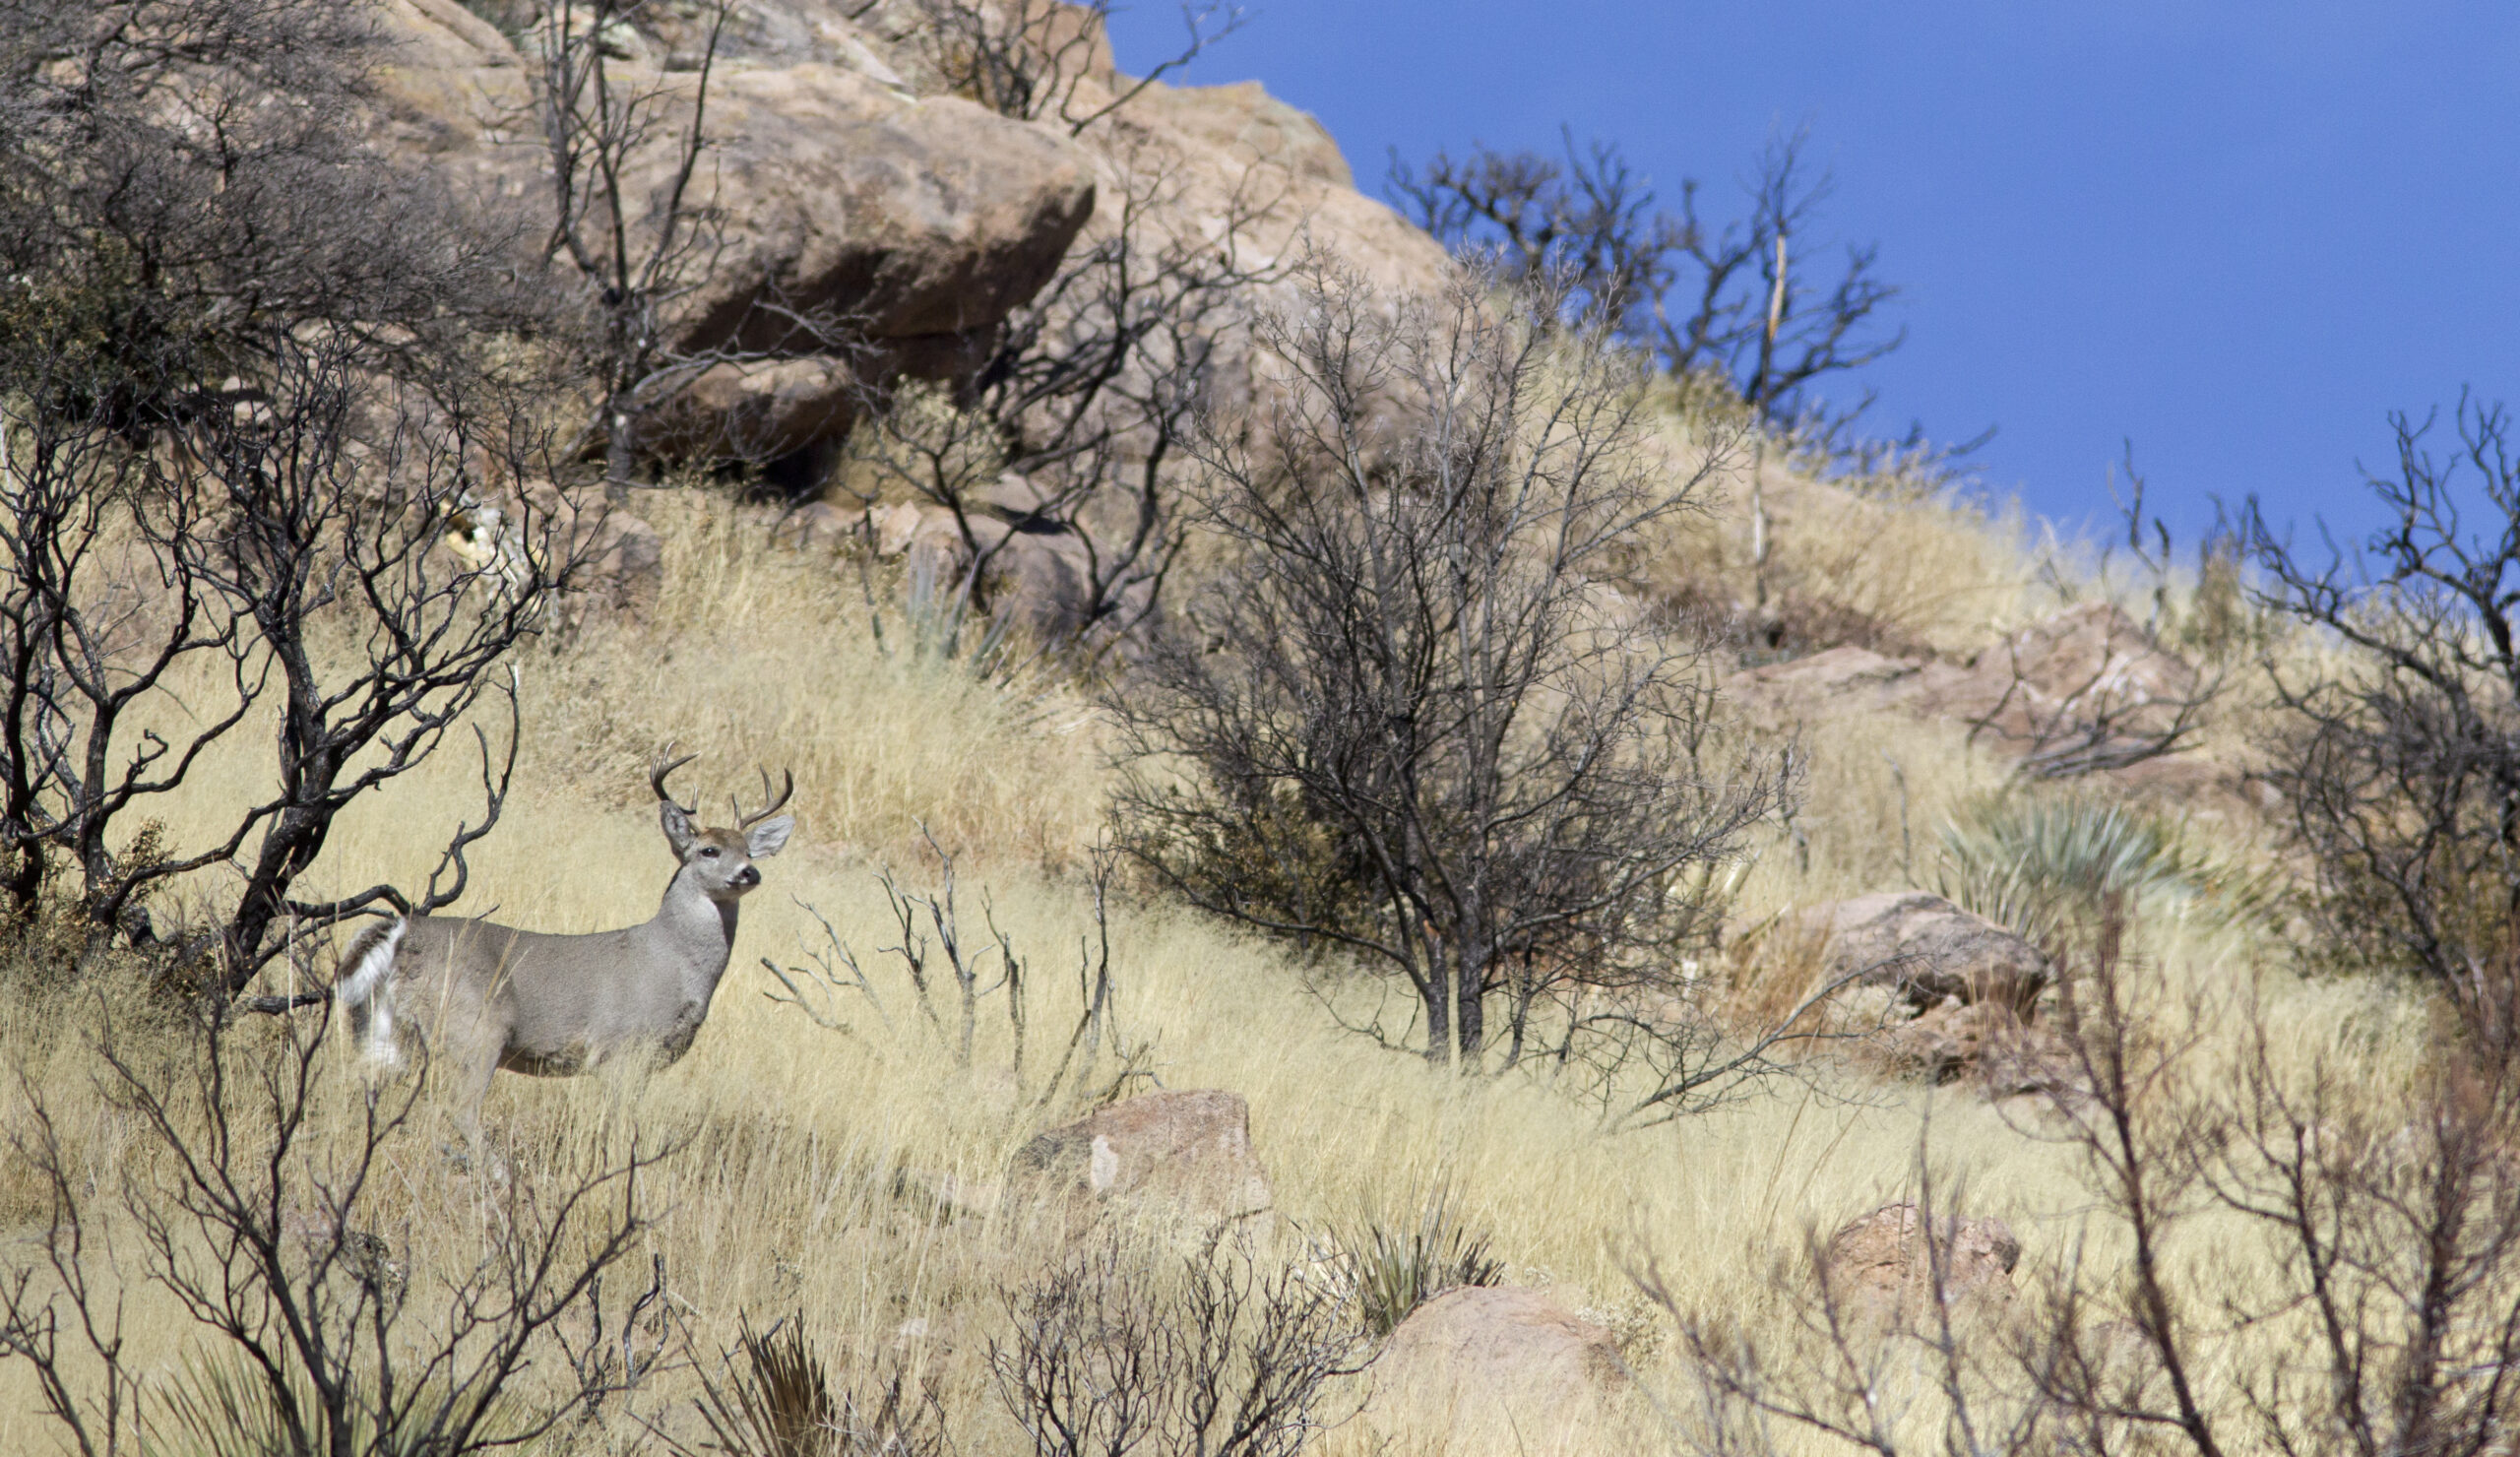 A Coues deer on a hillside.